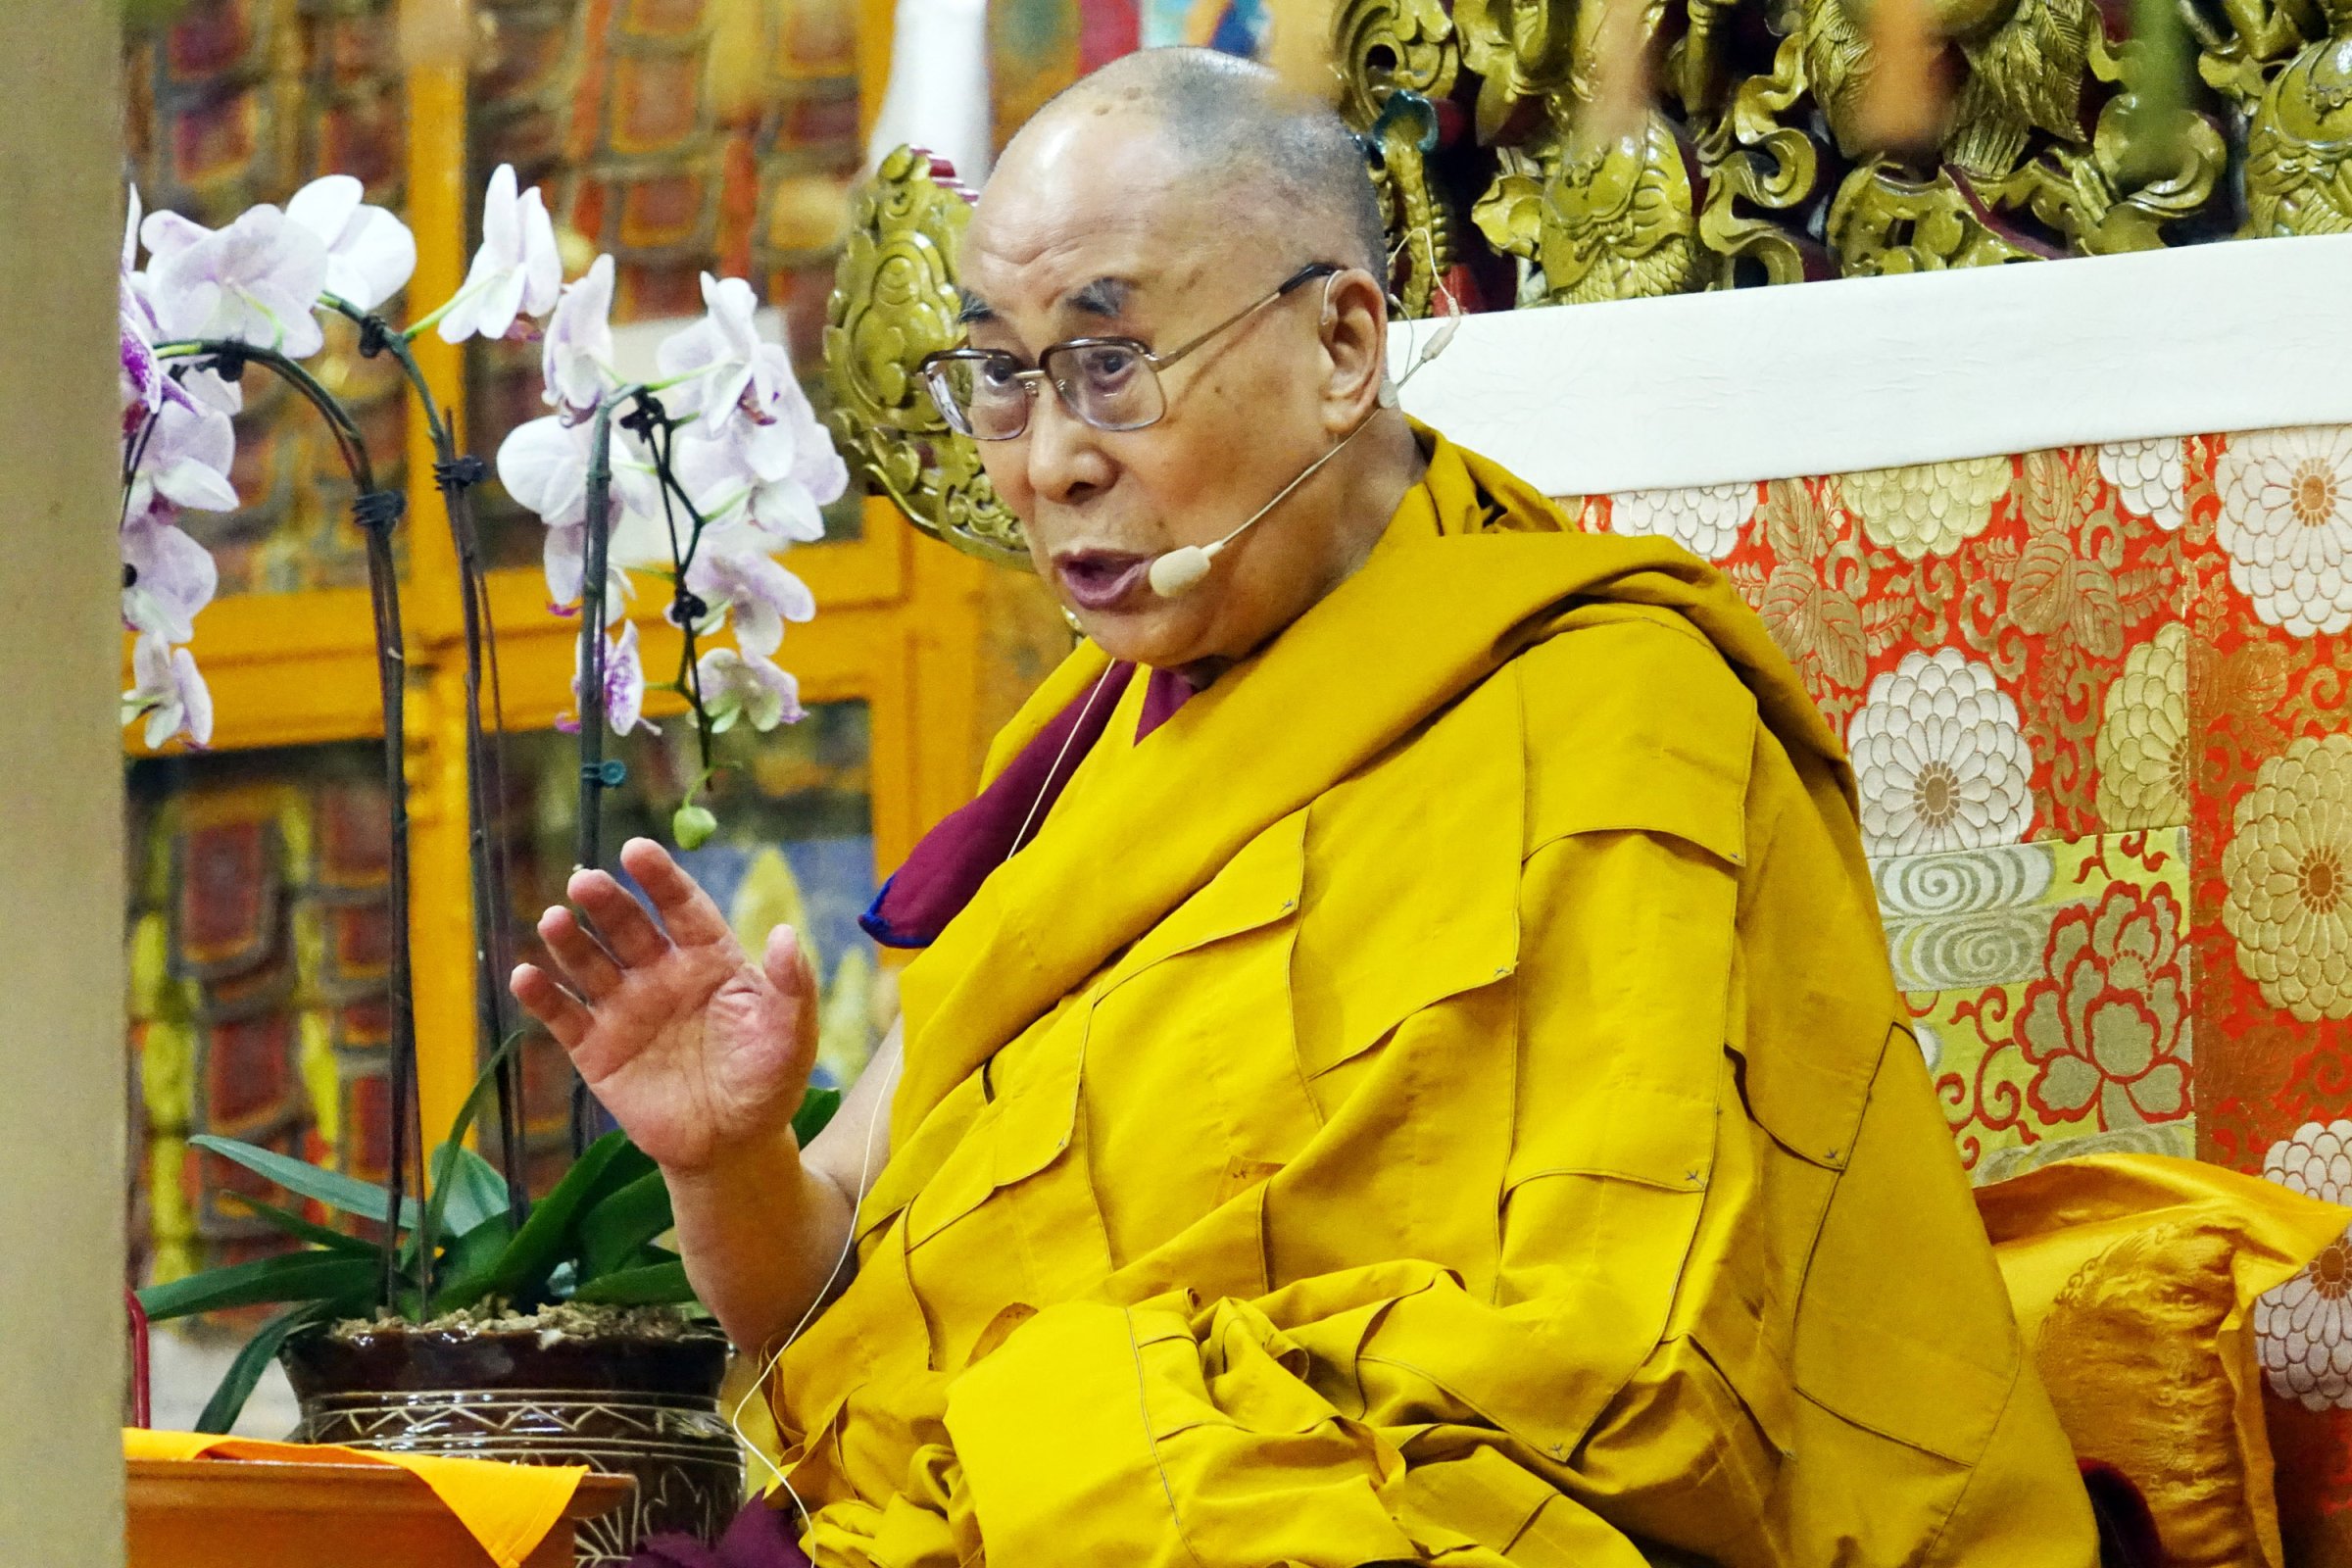 Tibetan Spiritual Leader Dalai Lama At The Tsuglakhang Temple In Dharamsala